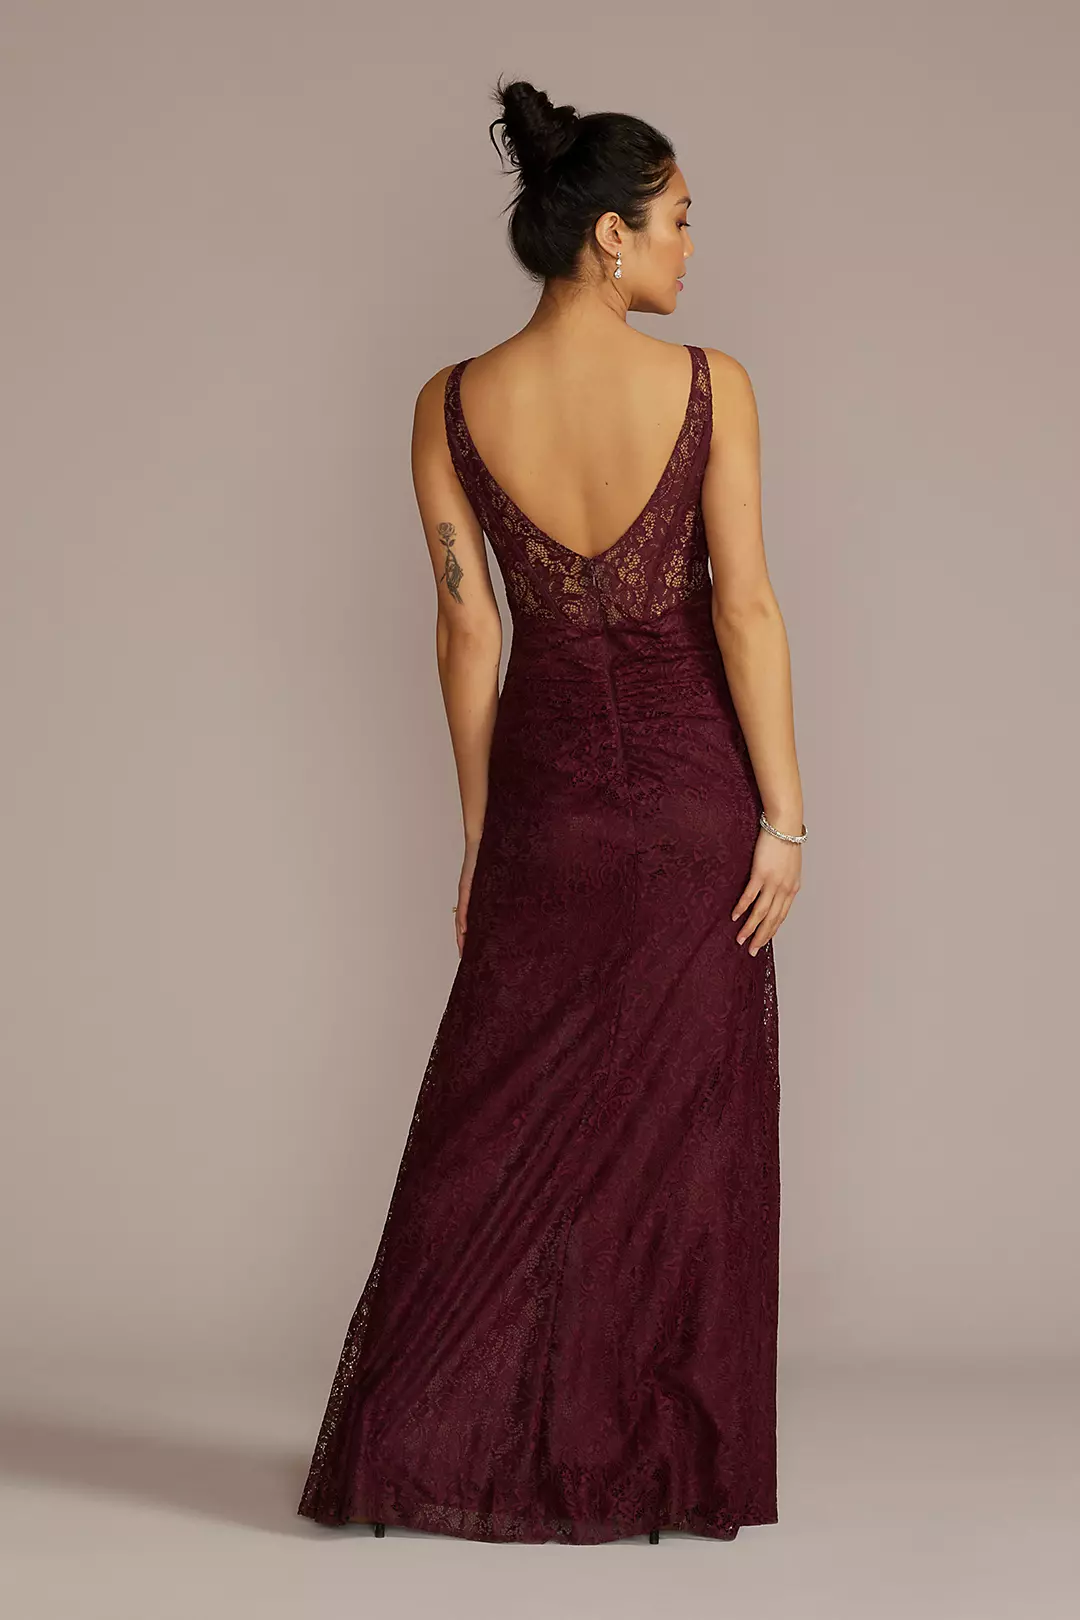 Lace Corset Bodice Dress with Slit Image 2